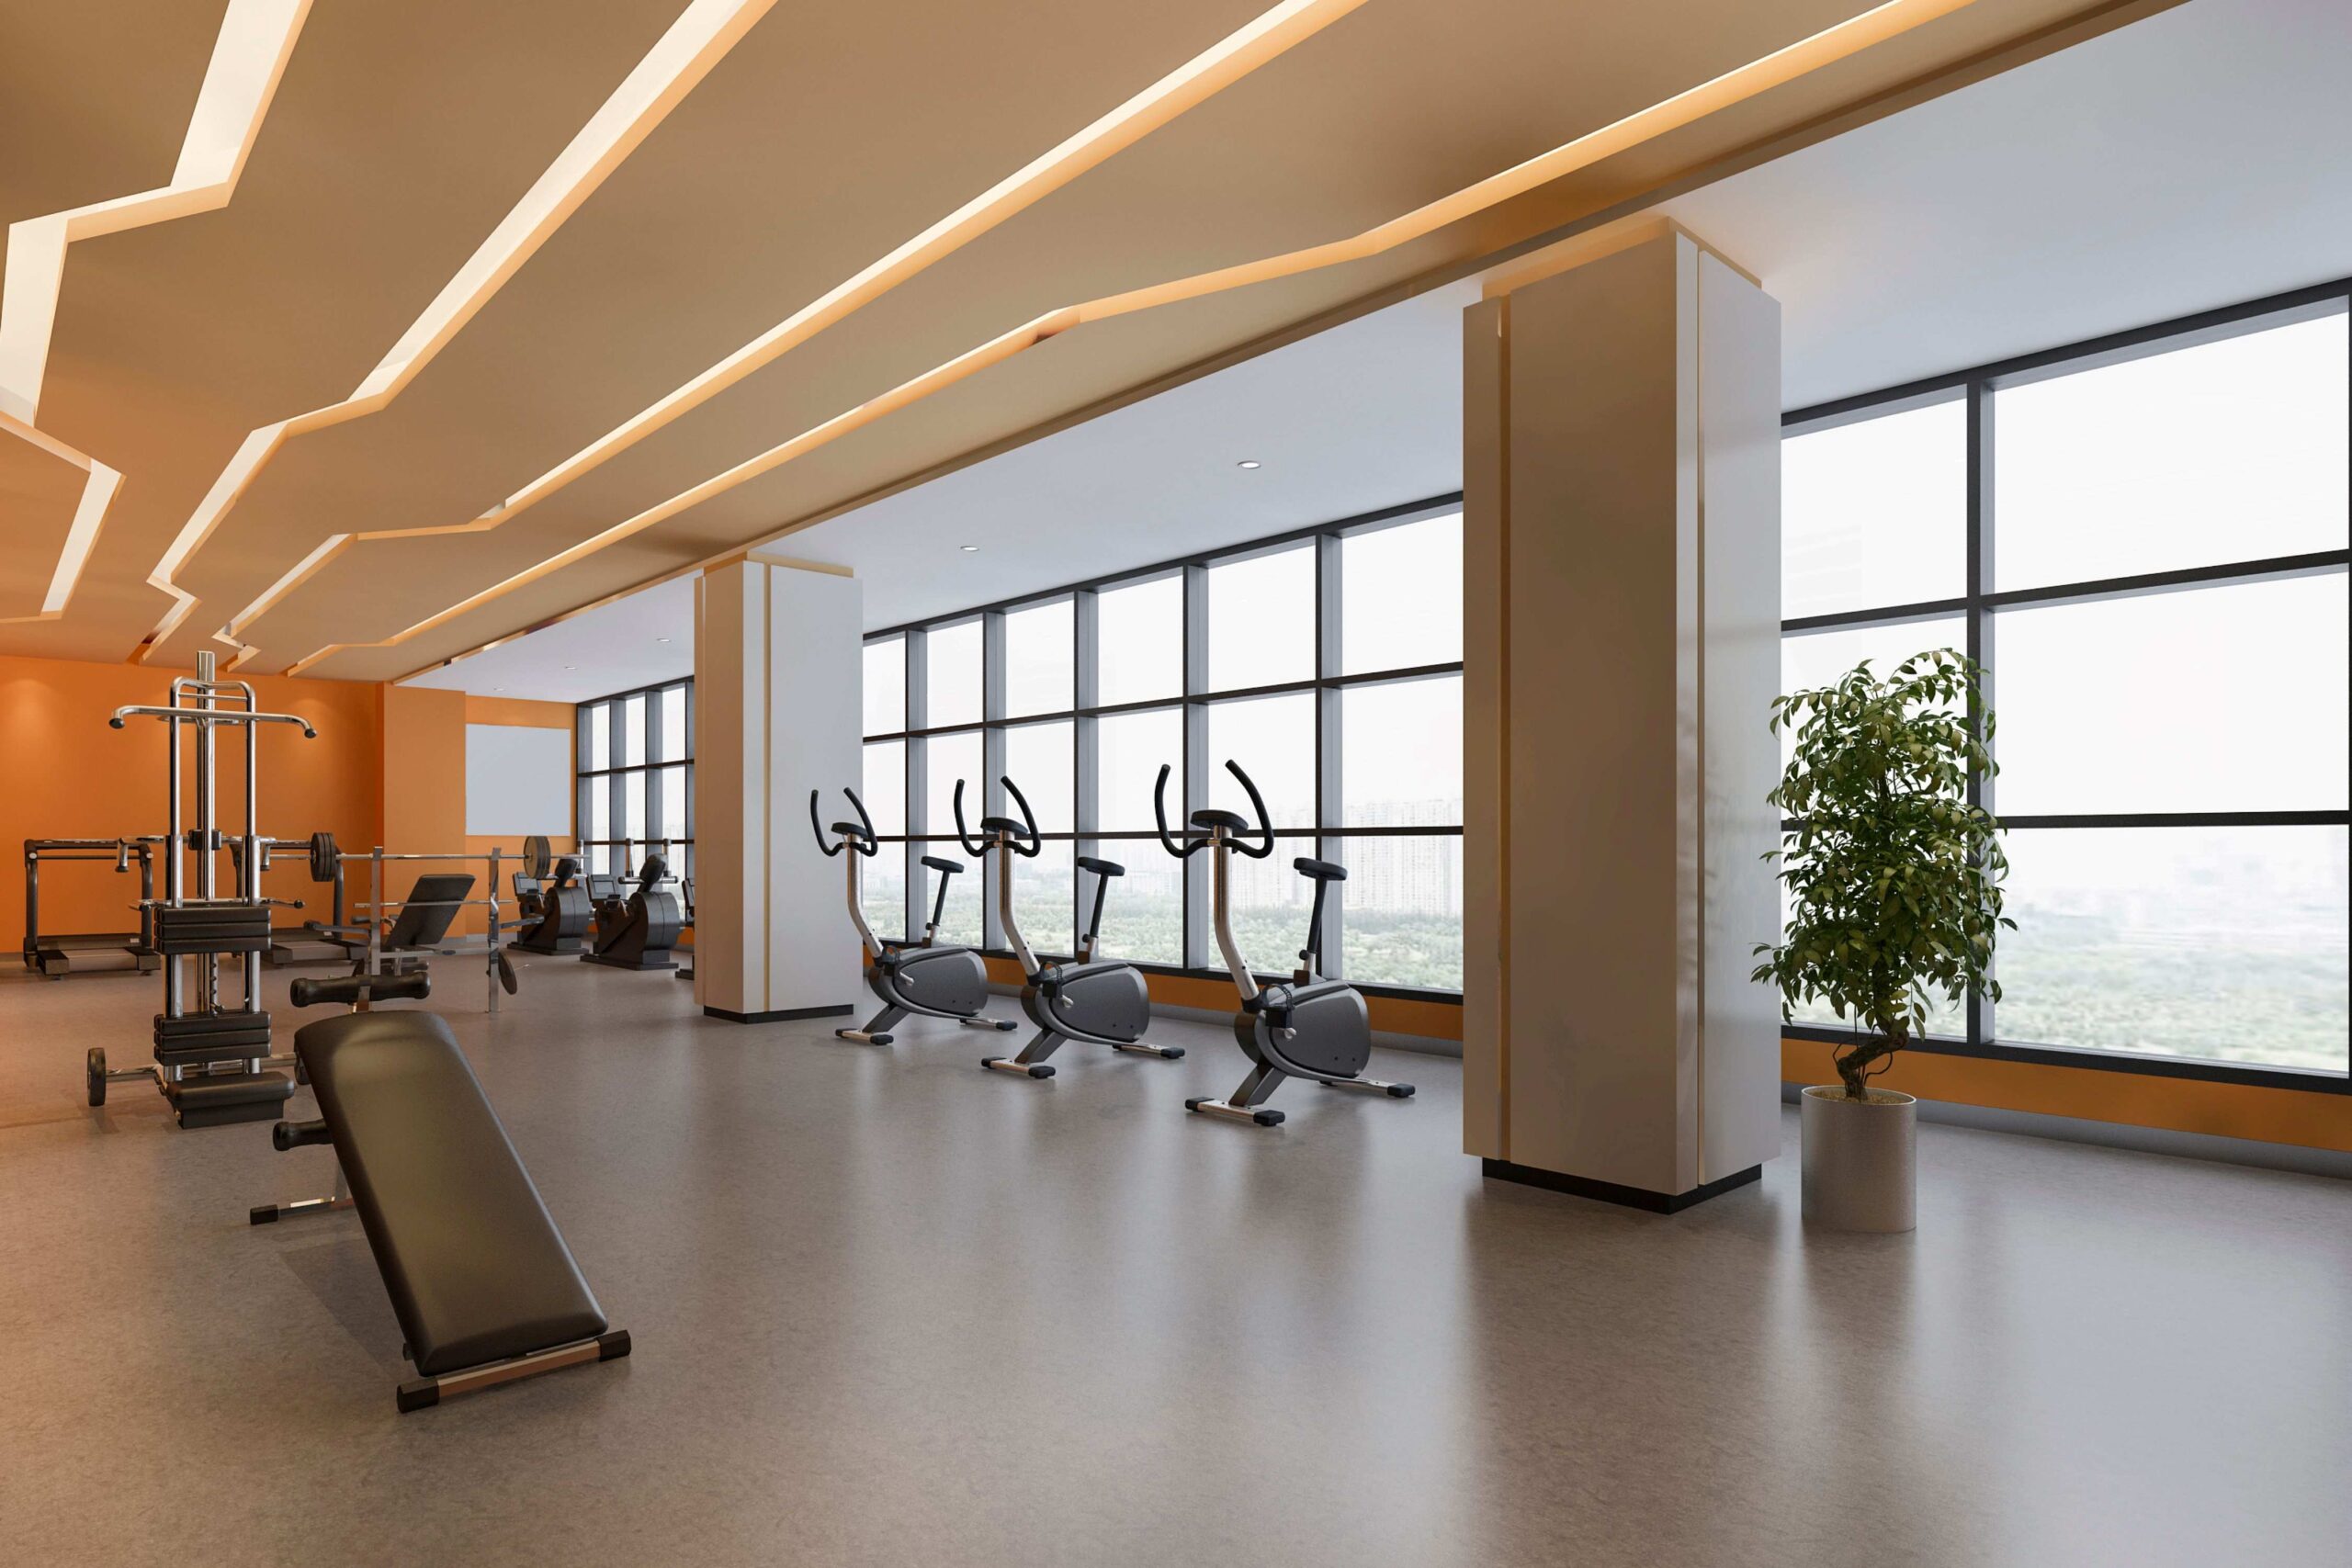 Luxury hotel fitness center interior design